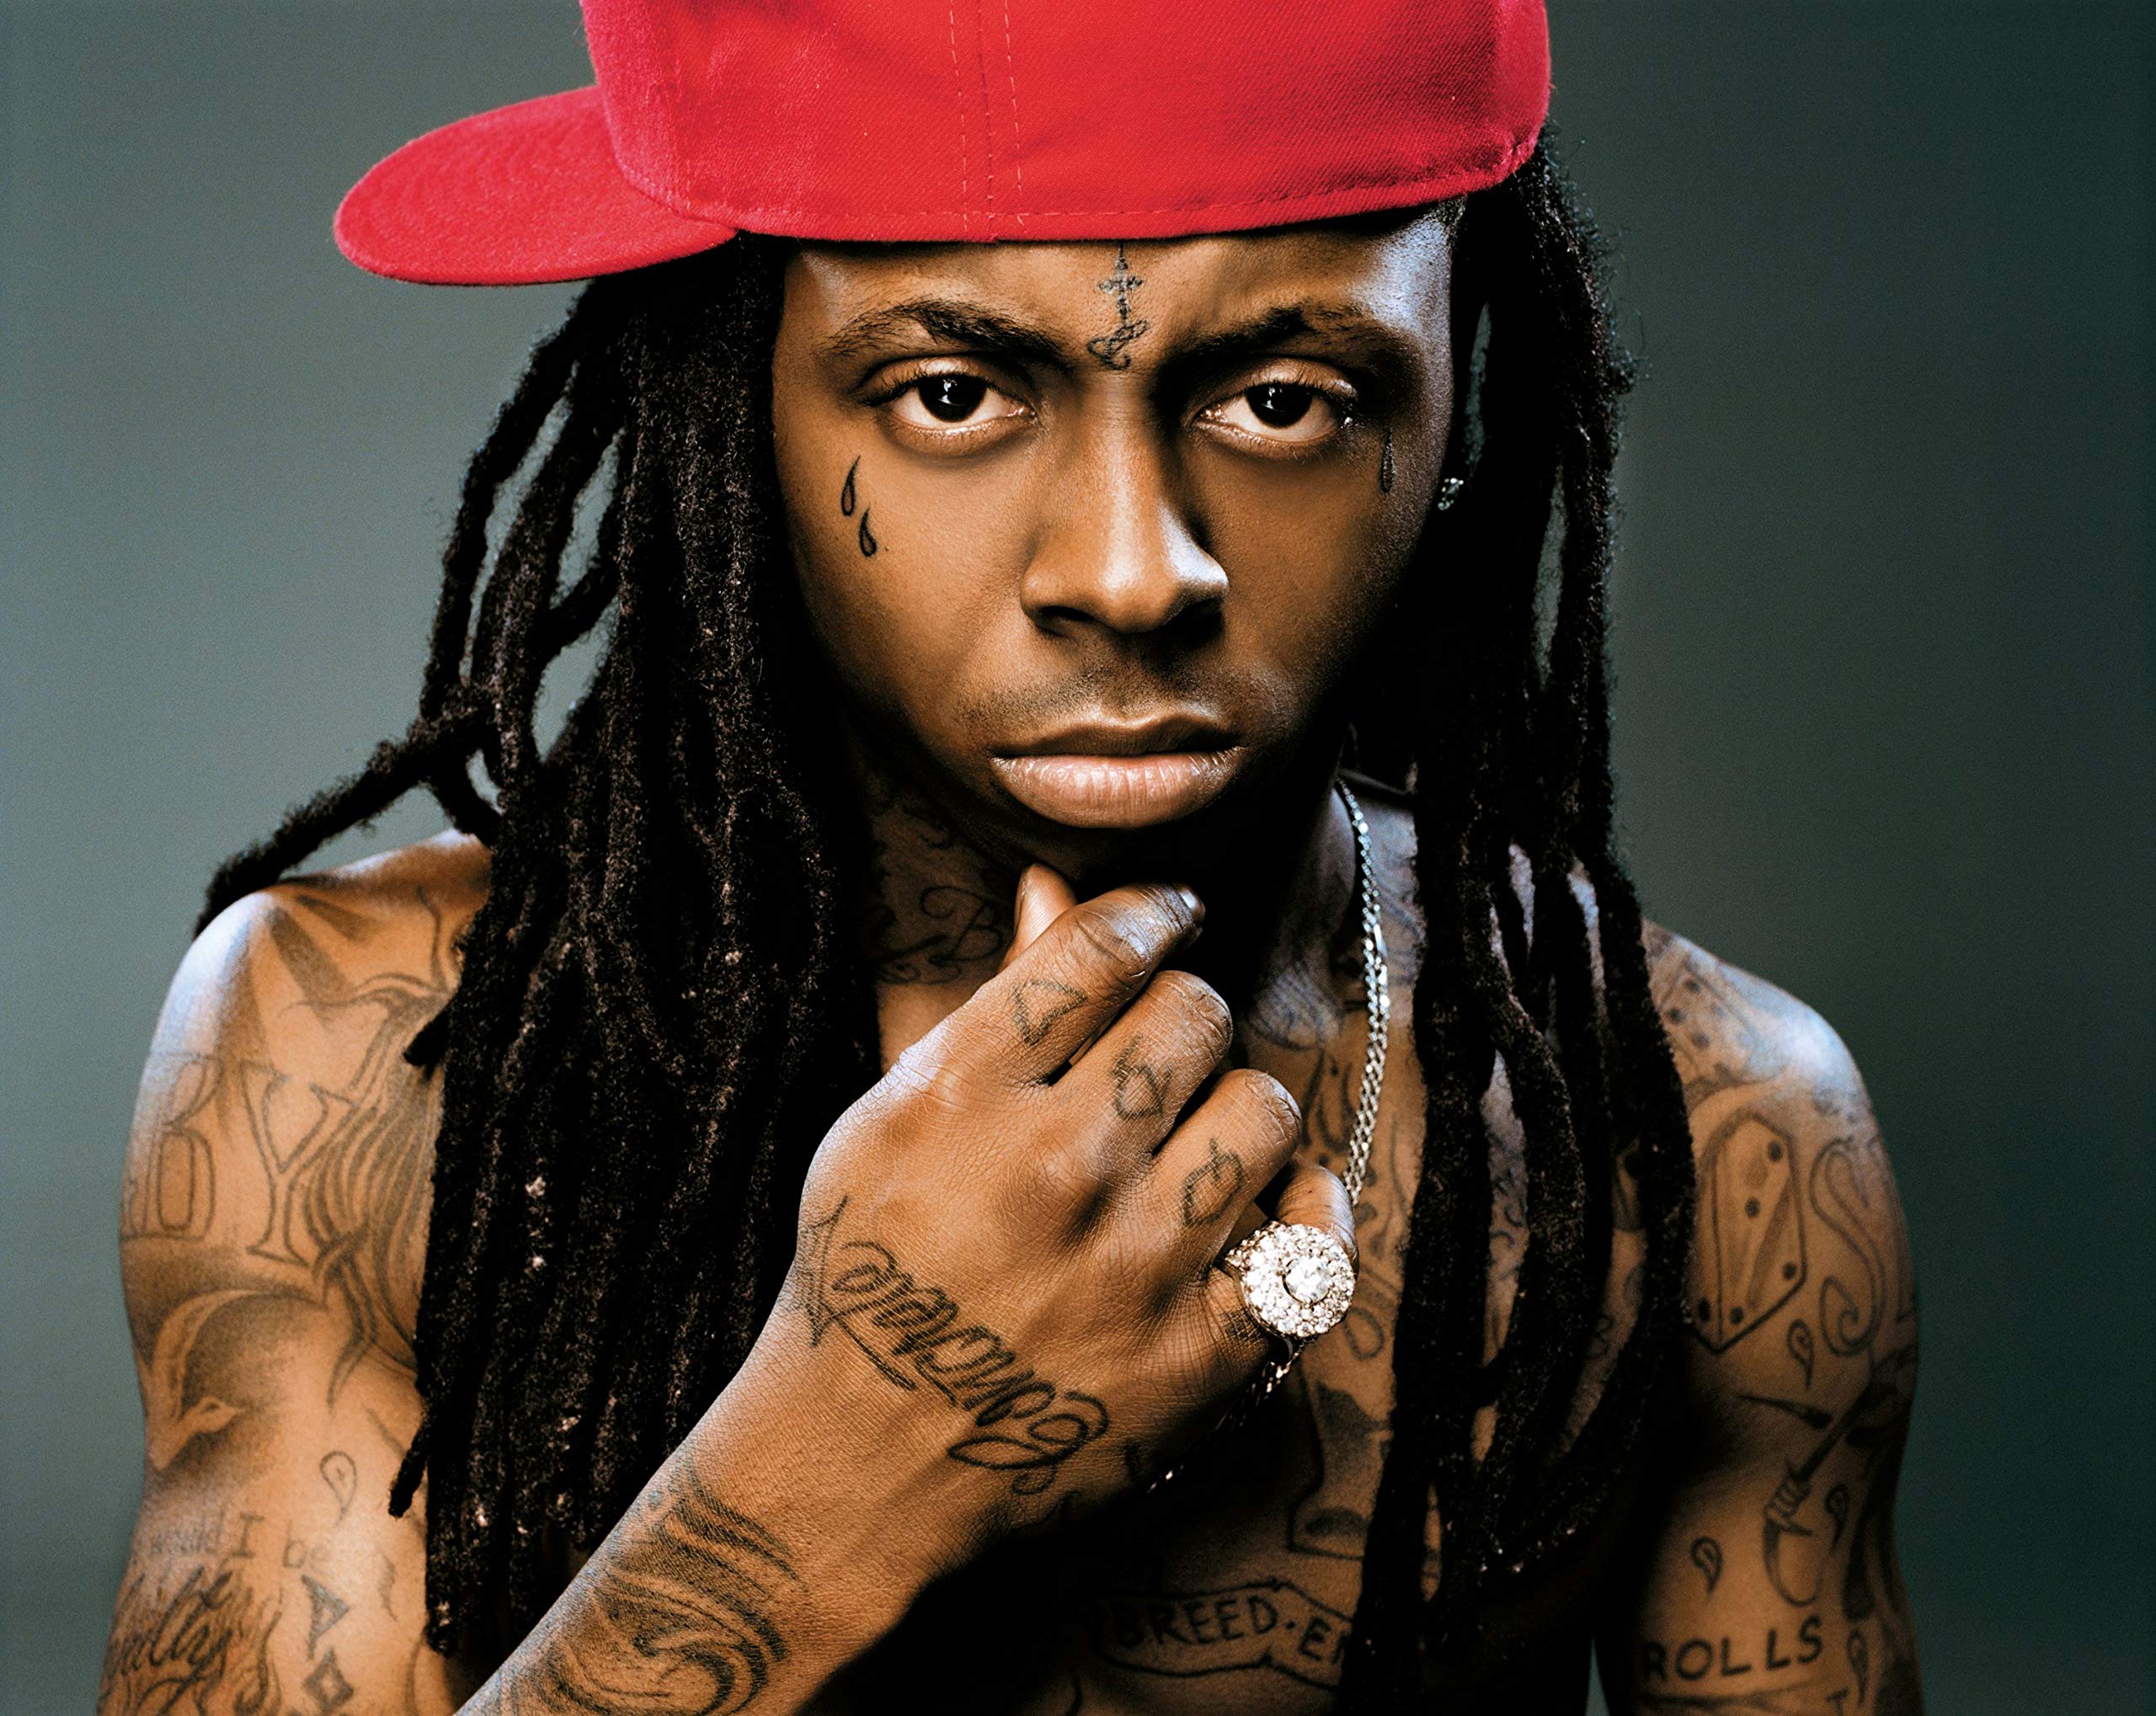 Lil Wayne Poster, Lil Wayne Print, Lil Wayne Wallpaper, Lil Wayne Gifts, Music Star Poster, Music Print, Rapper, Lil Wayne Photo (S x 17 inch (28x43 cm))